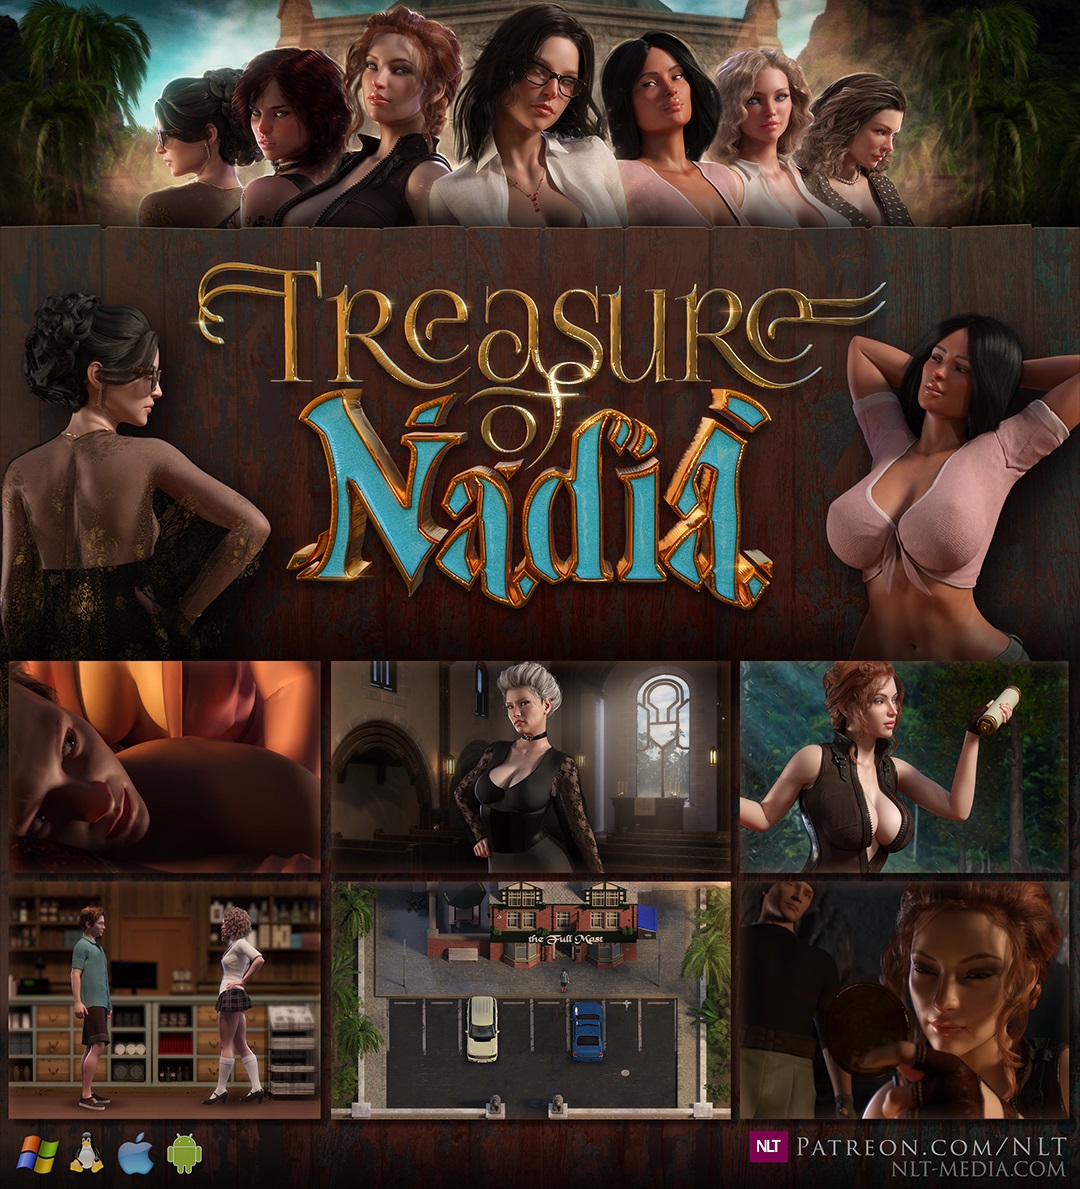 Treasure of Nadia adult game